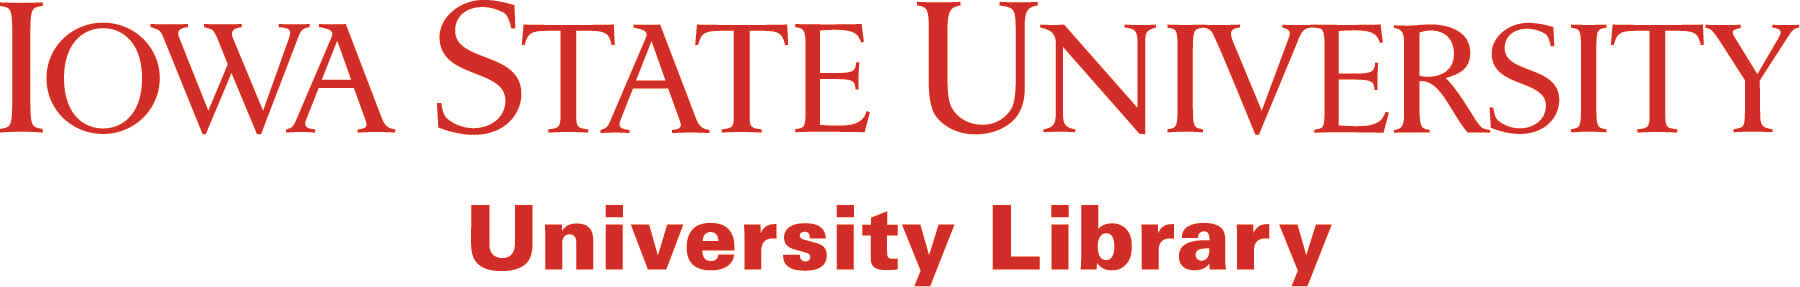 ISU University Library Red C6